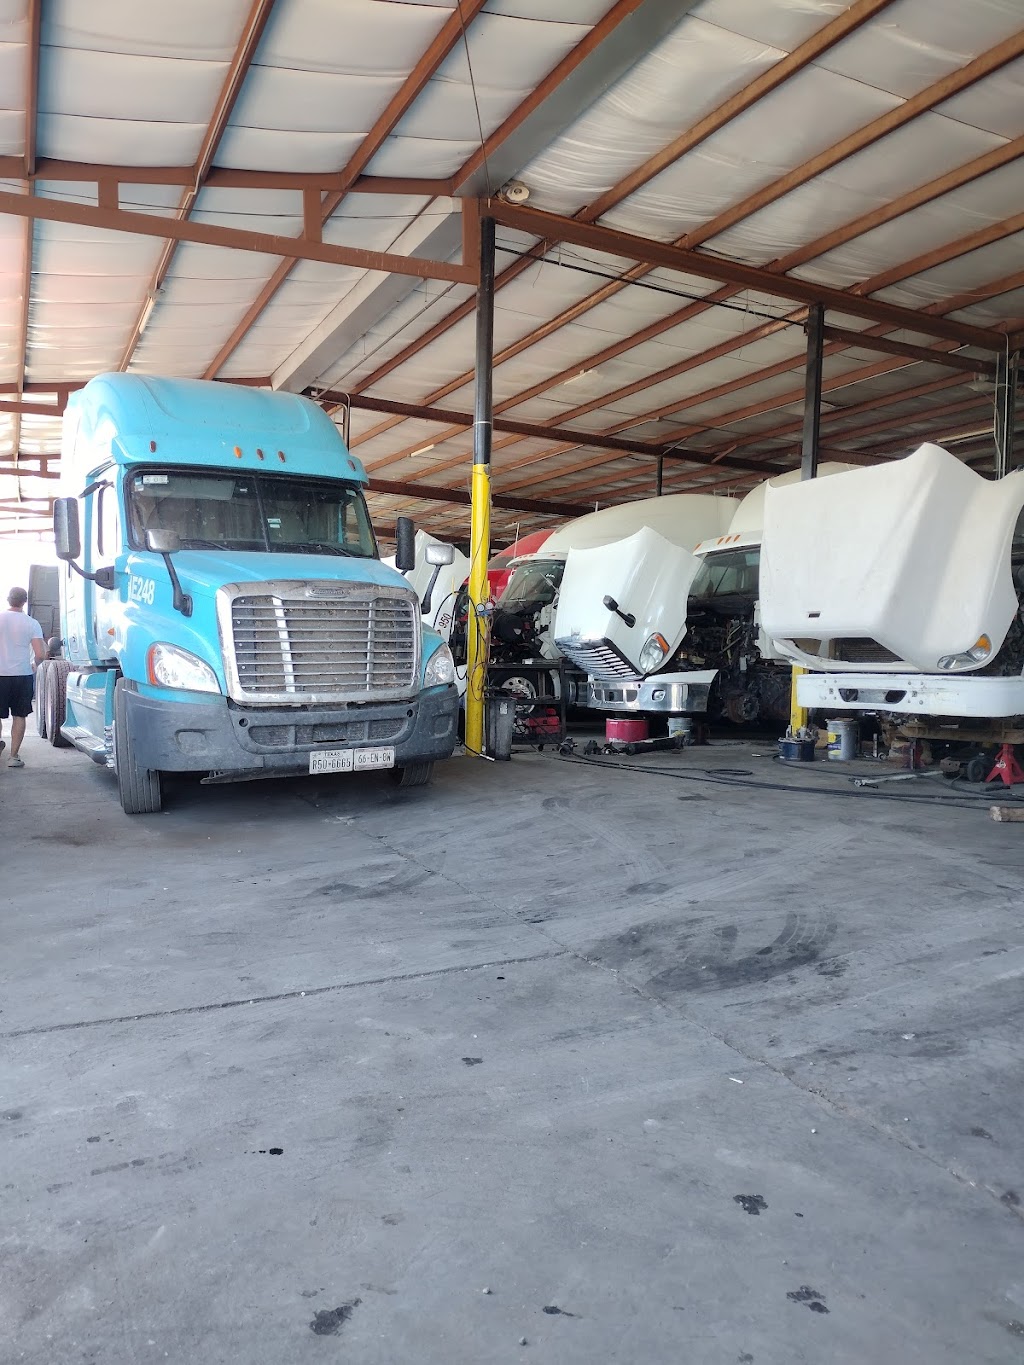 Suarez Truck Parts & Service LLC | 18211 FM 1472, Laredo, TX 78045, USA | Phone: (956) 723-3326